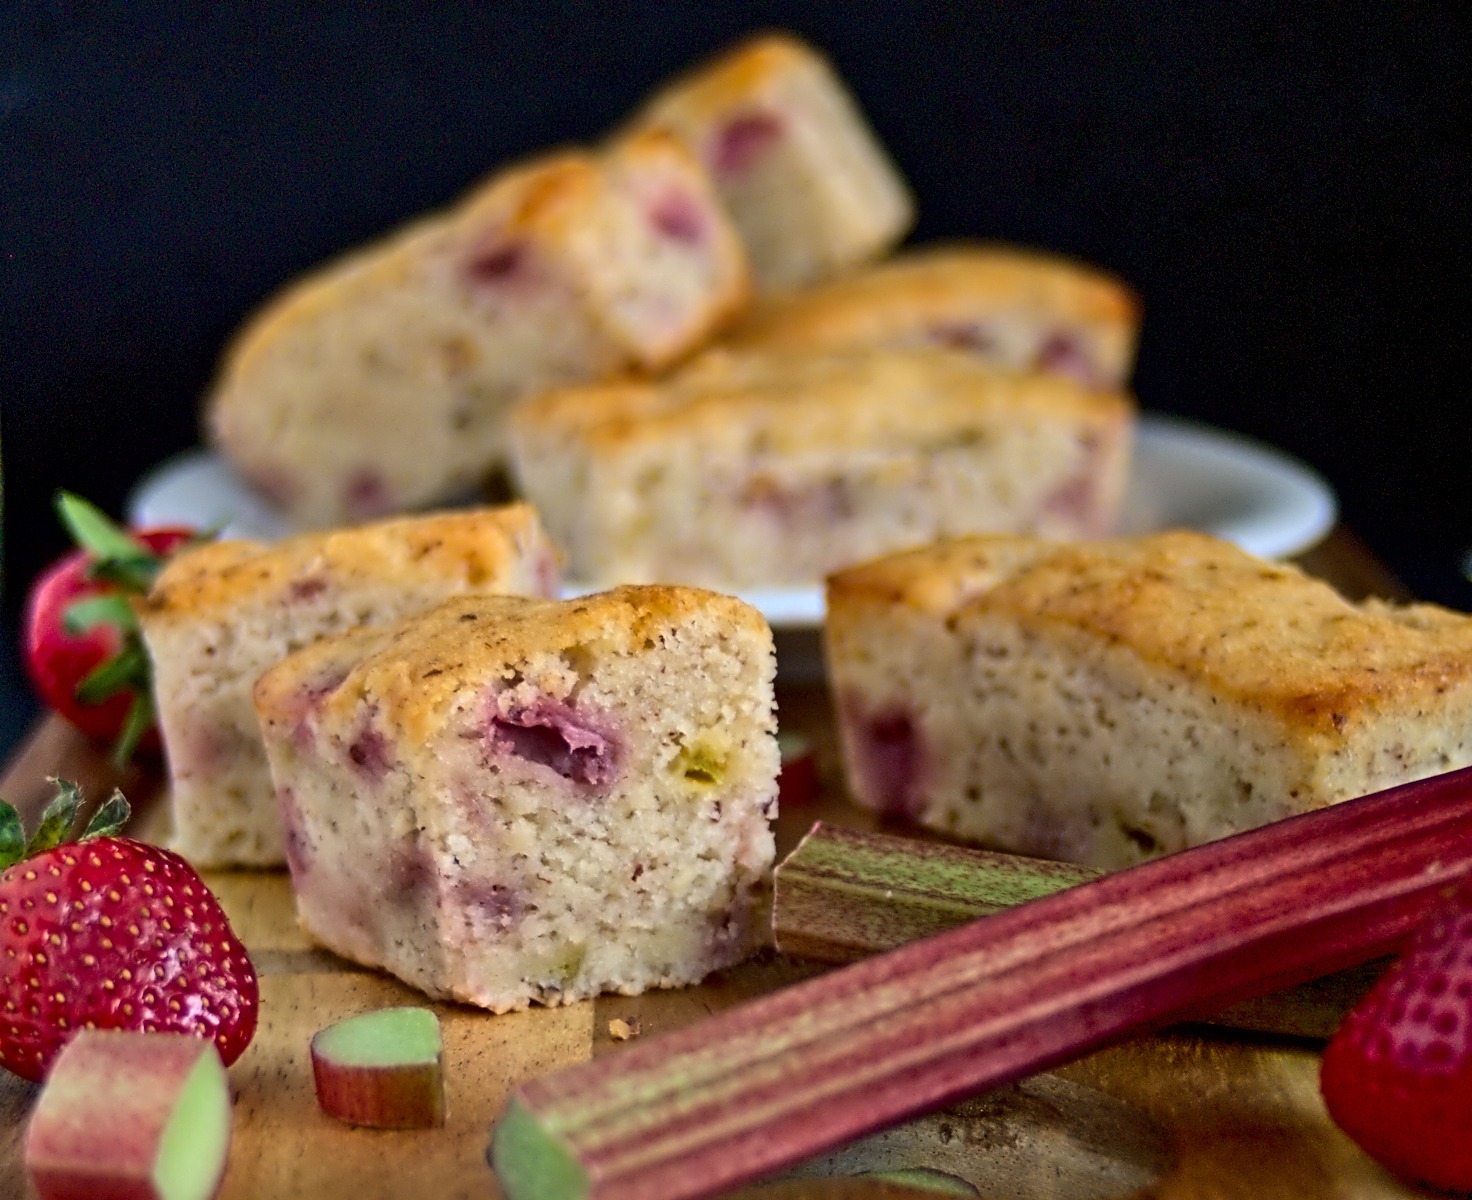 Rhabarber-Erdbeer-Muffins – super saftig & fruchtig!